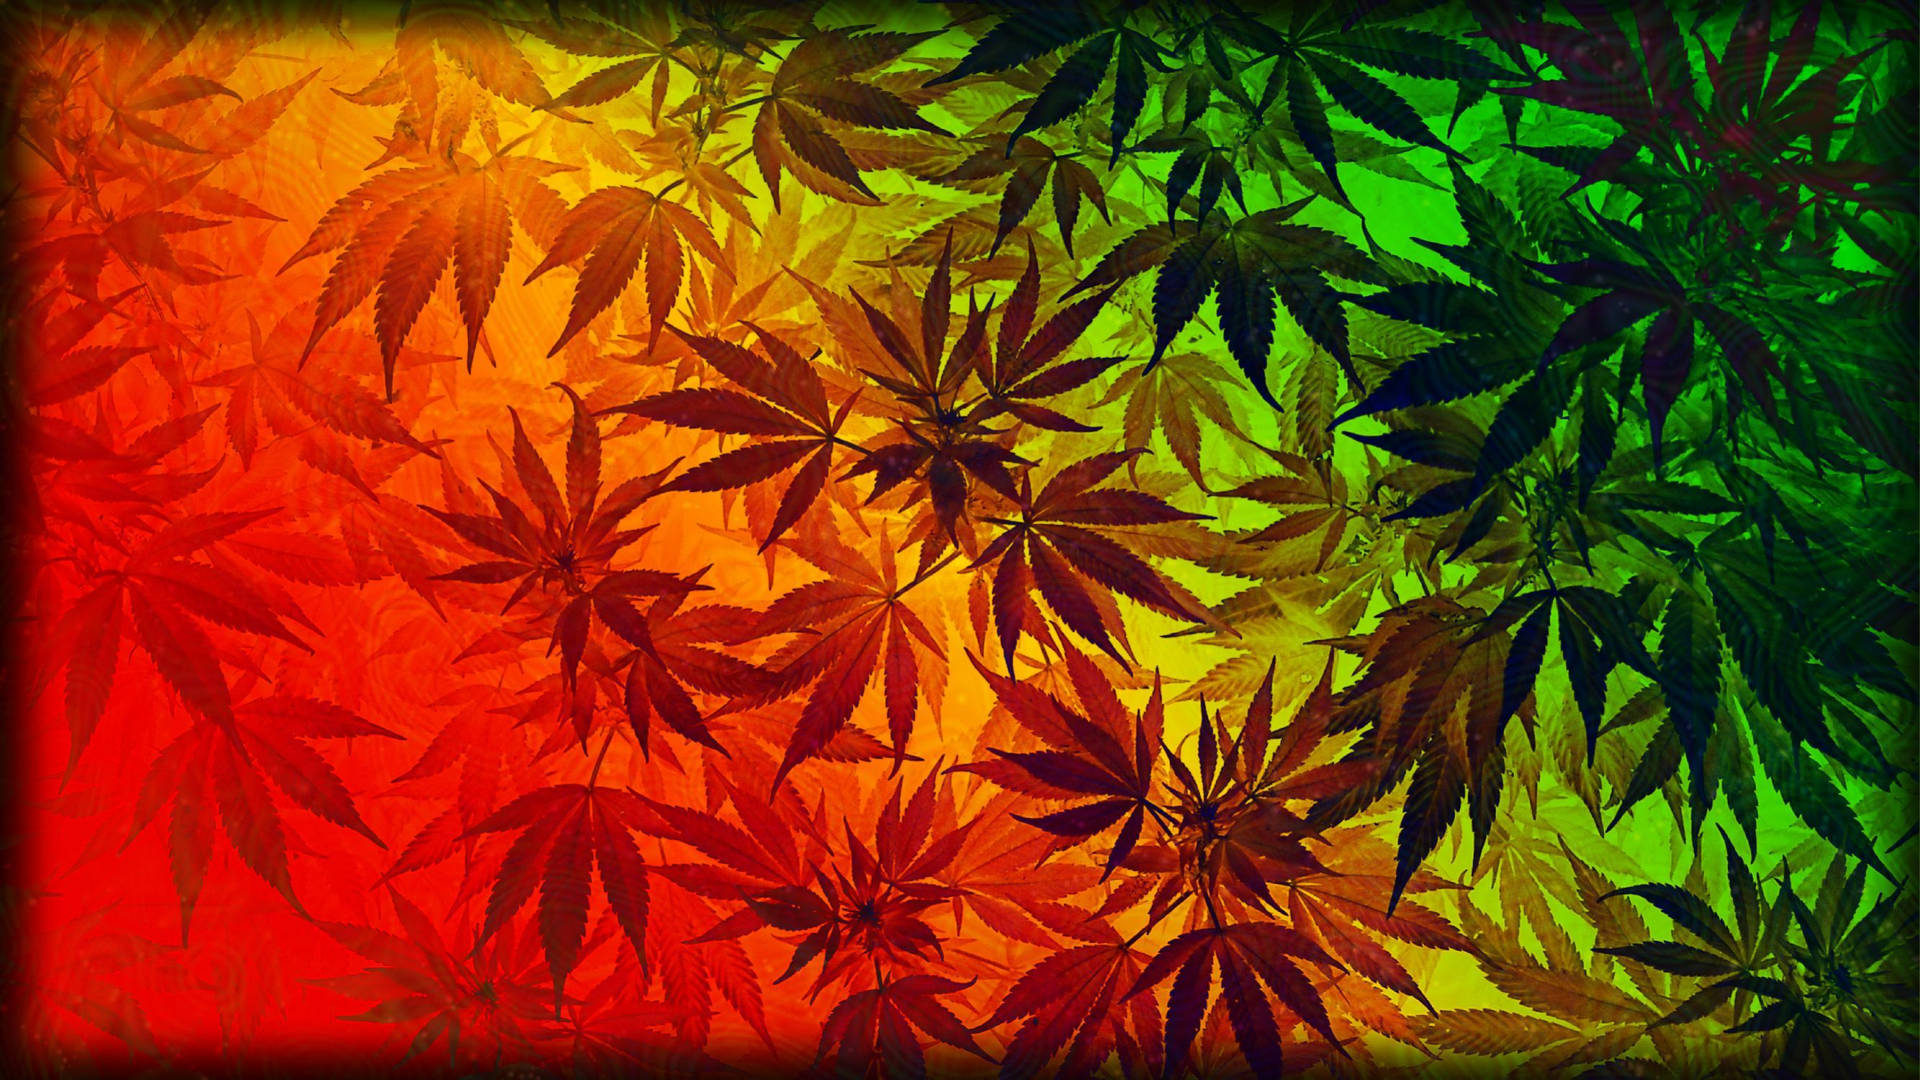 Free Marijuana Wallpaper Downloads, [100+] Marijuana Wallpapers for FREE |  